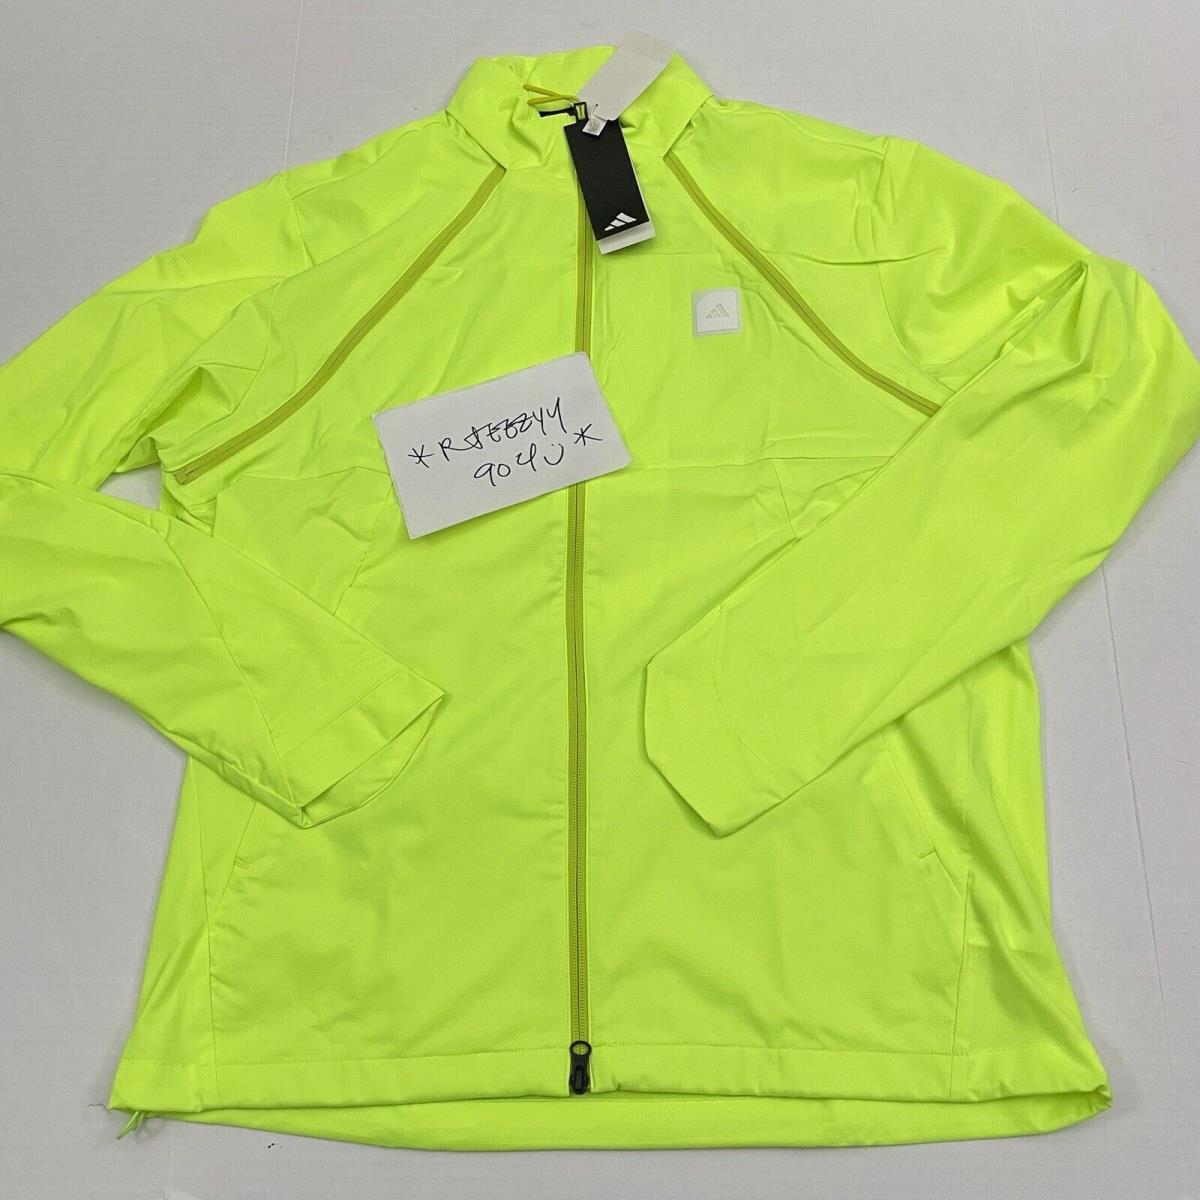 Mens Size L Adidas Adicross Transitional Convertible Jacket IB1976 Neon